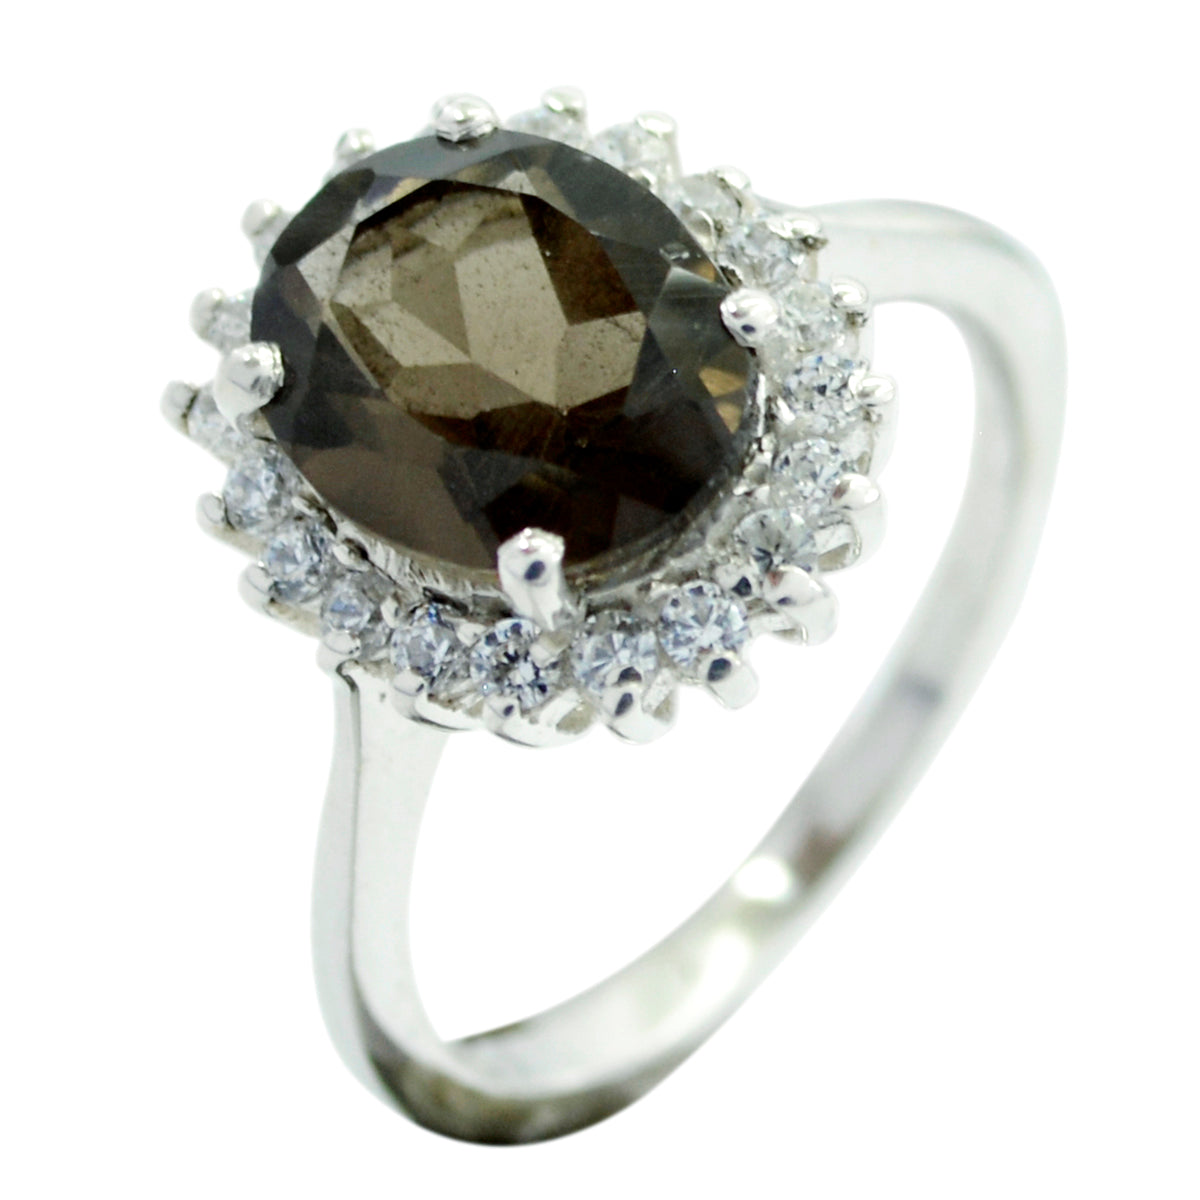 Riyo Bonny Gemstones Smoky Quartz Solid Silver Ring Ladies Jewelry